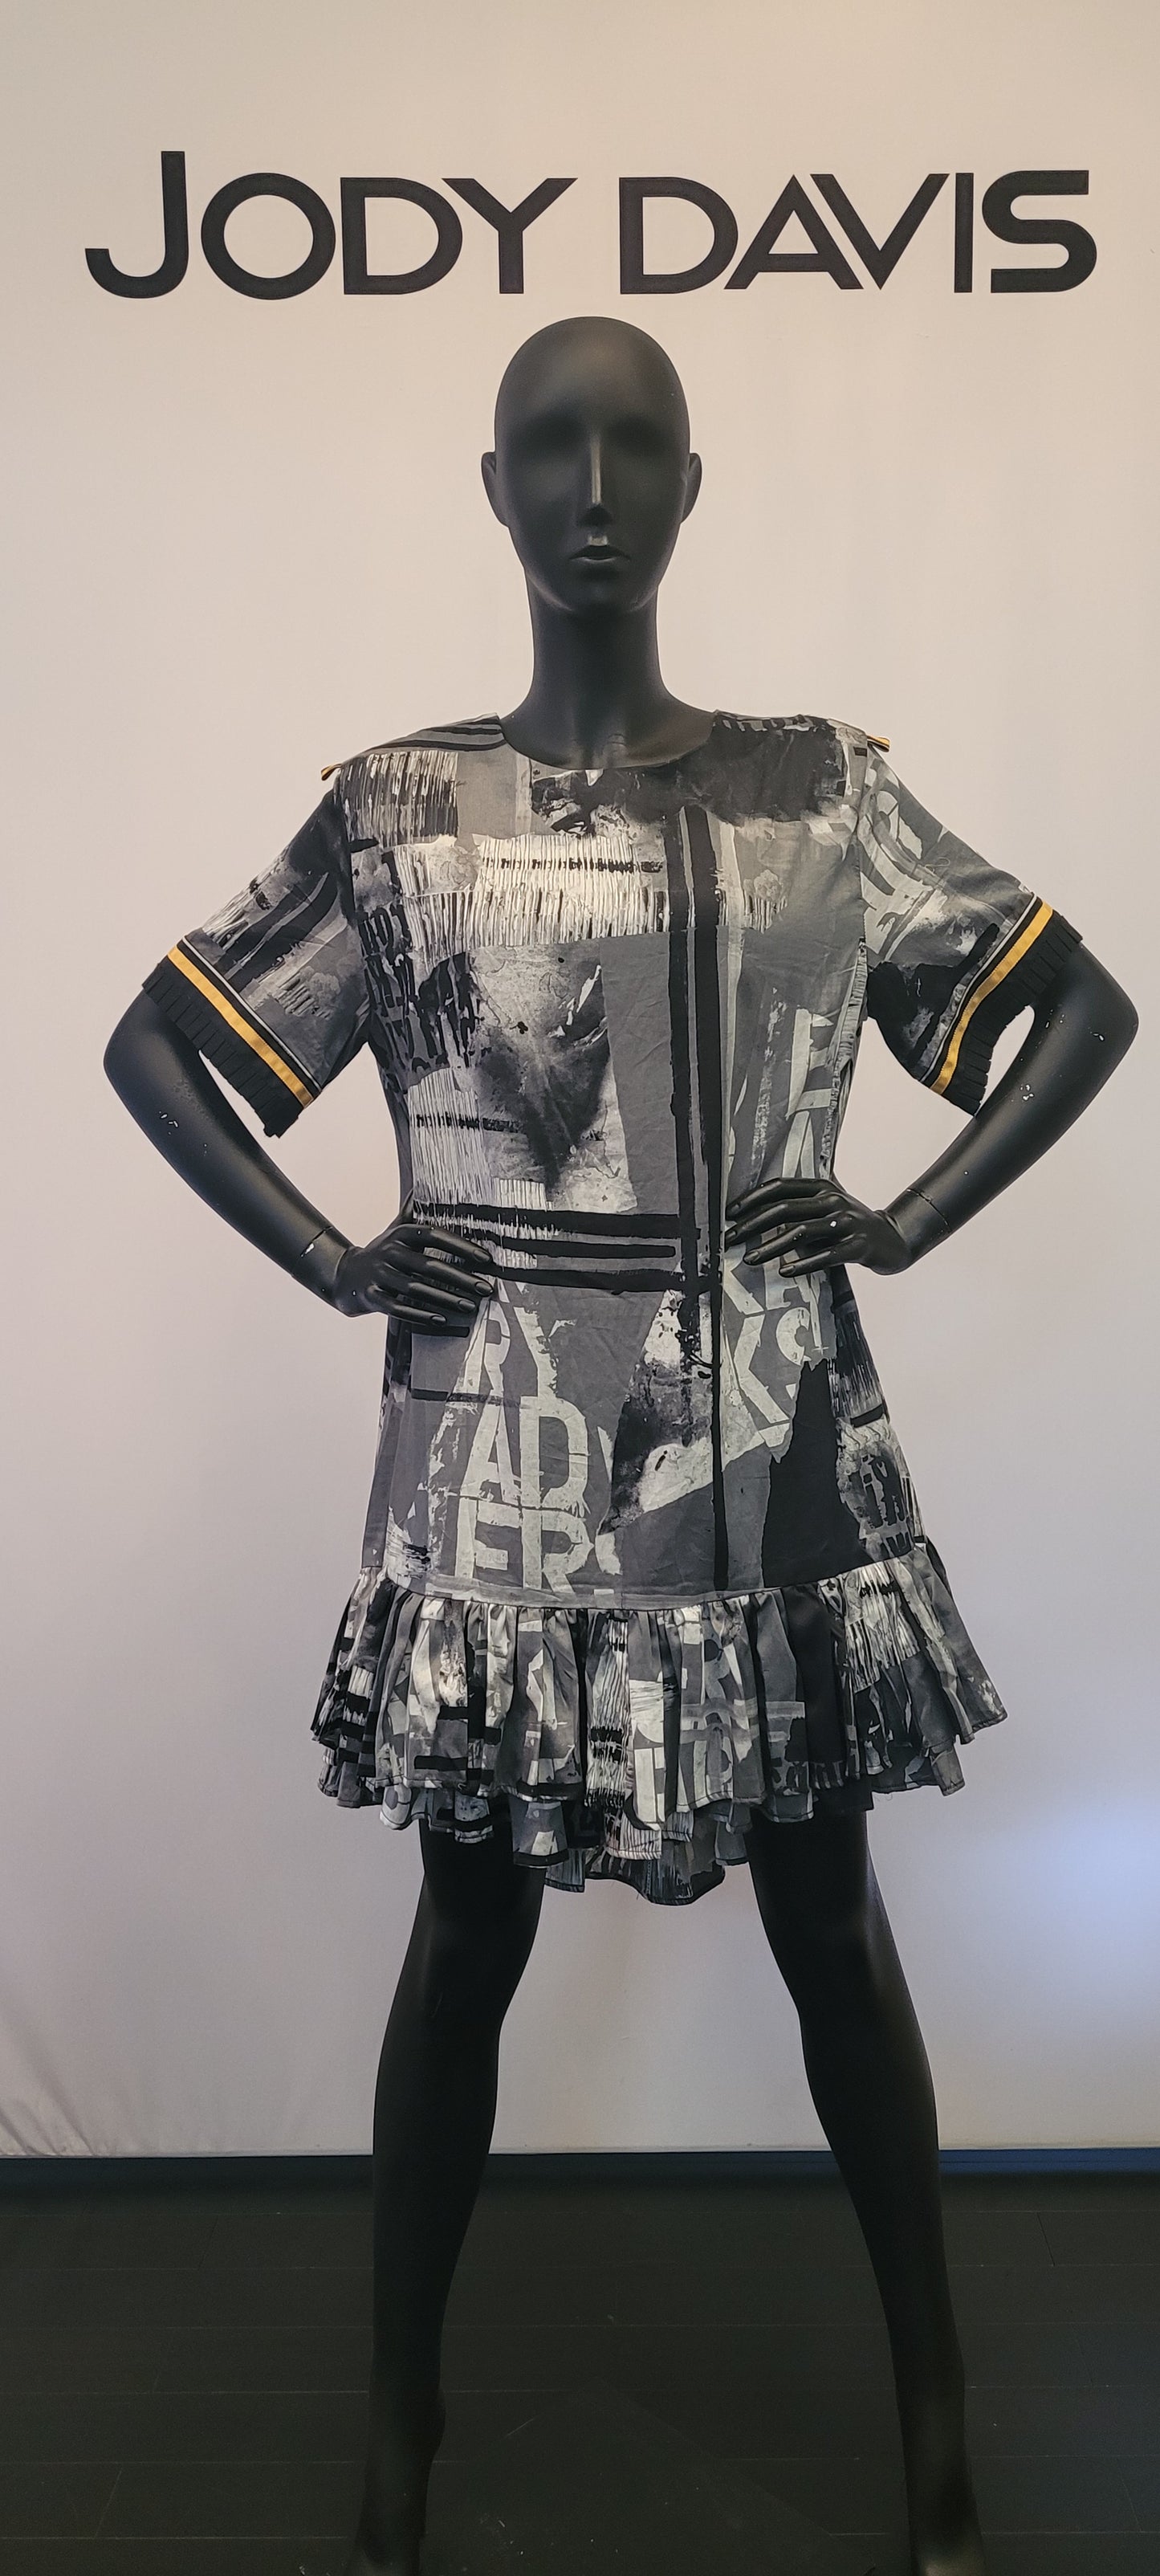 ShoBall Black & Gray printed Dress